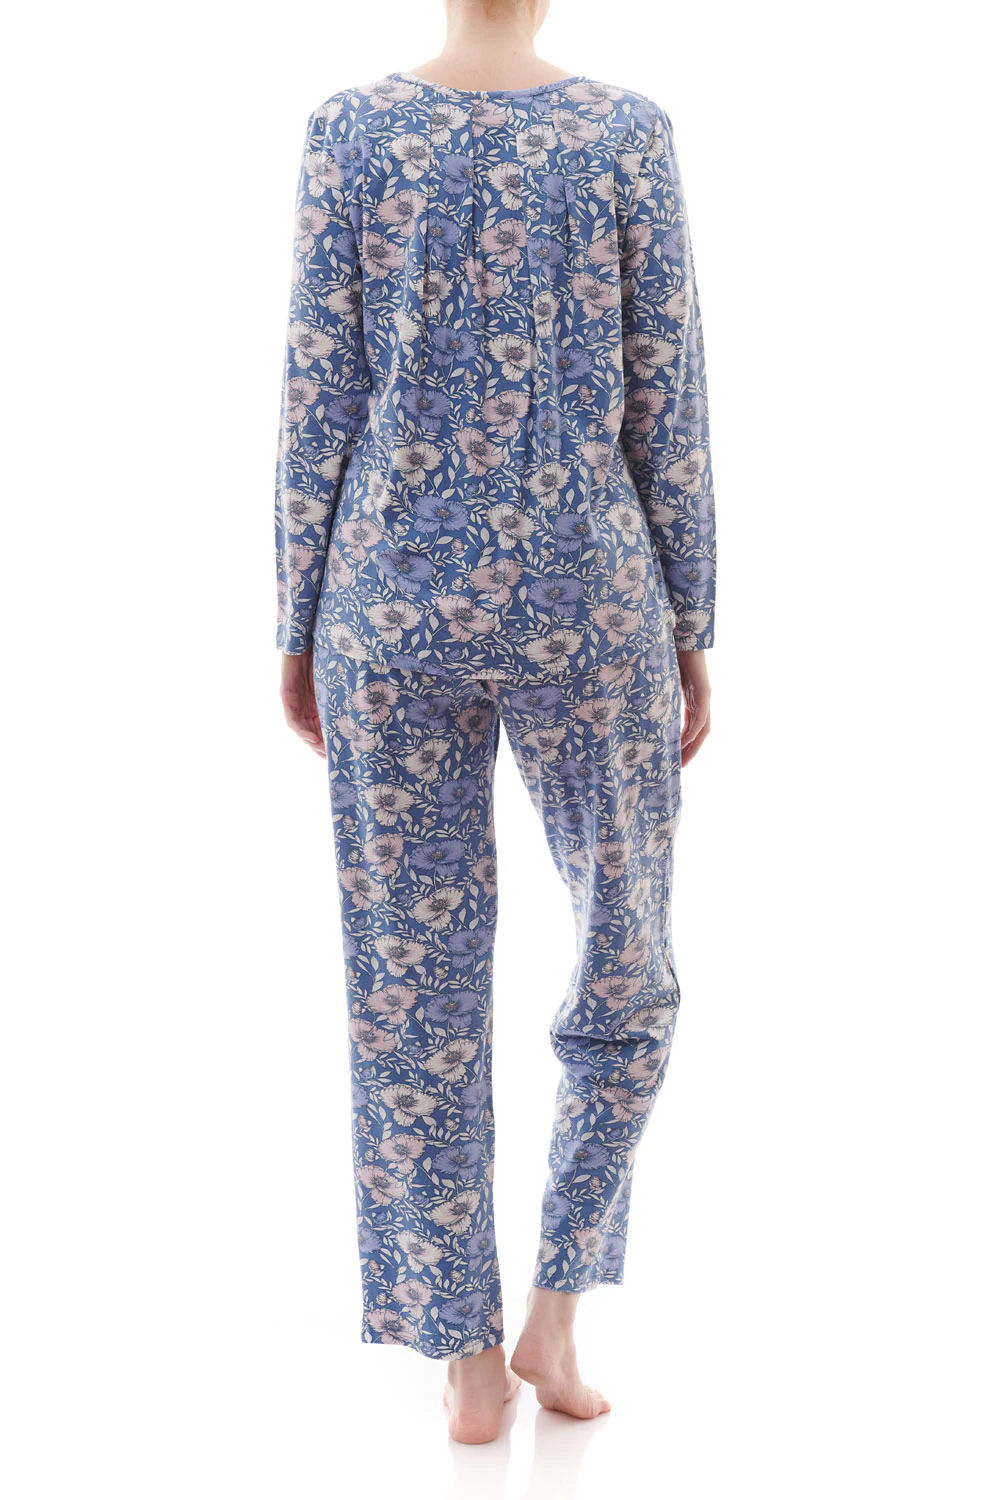 Givoni Yolanda Pyjama - LAST SIZE XL - Silk Elegance Lingerie and Swimwear